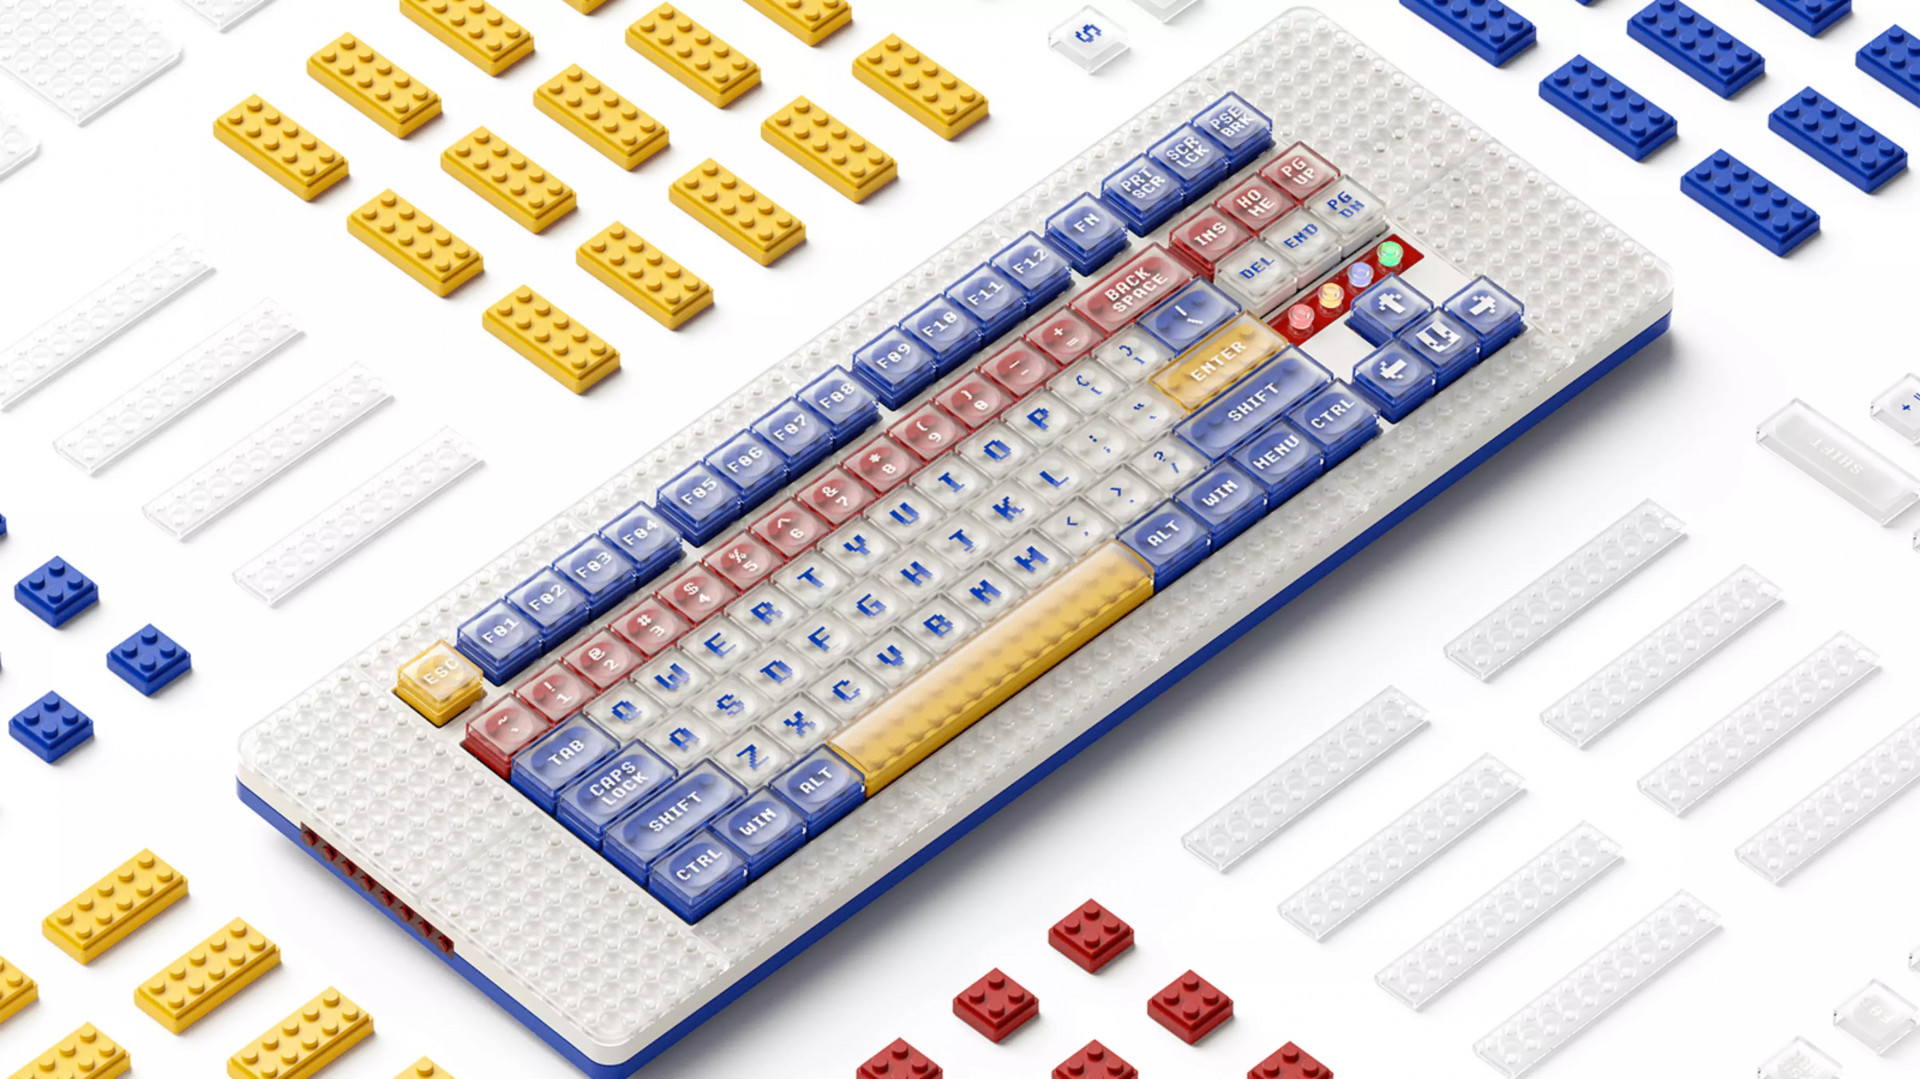 Клавиатура из LEGO скоро появится в продаже. Хотите?